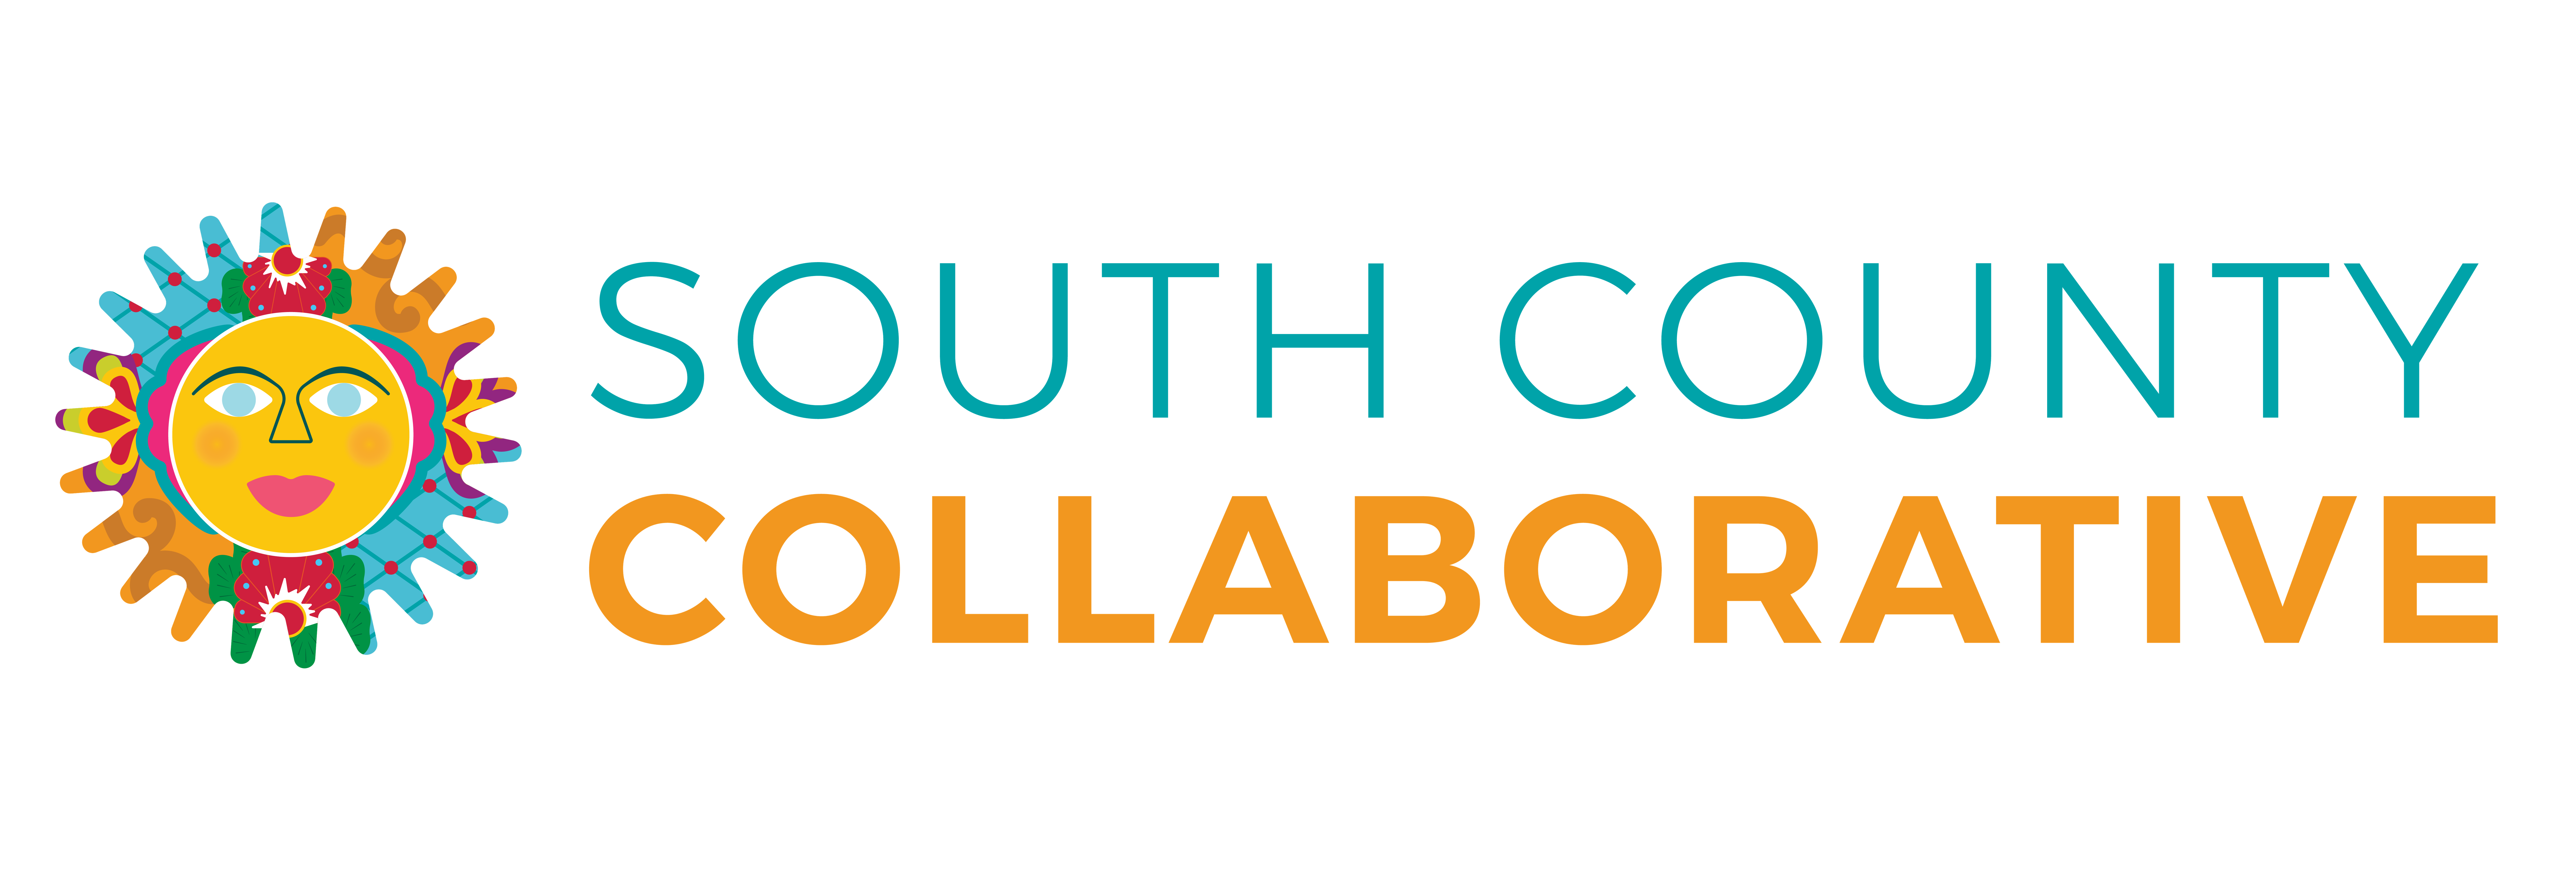 South County Collaborative